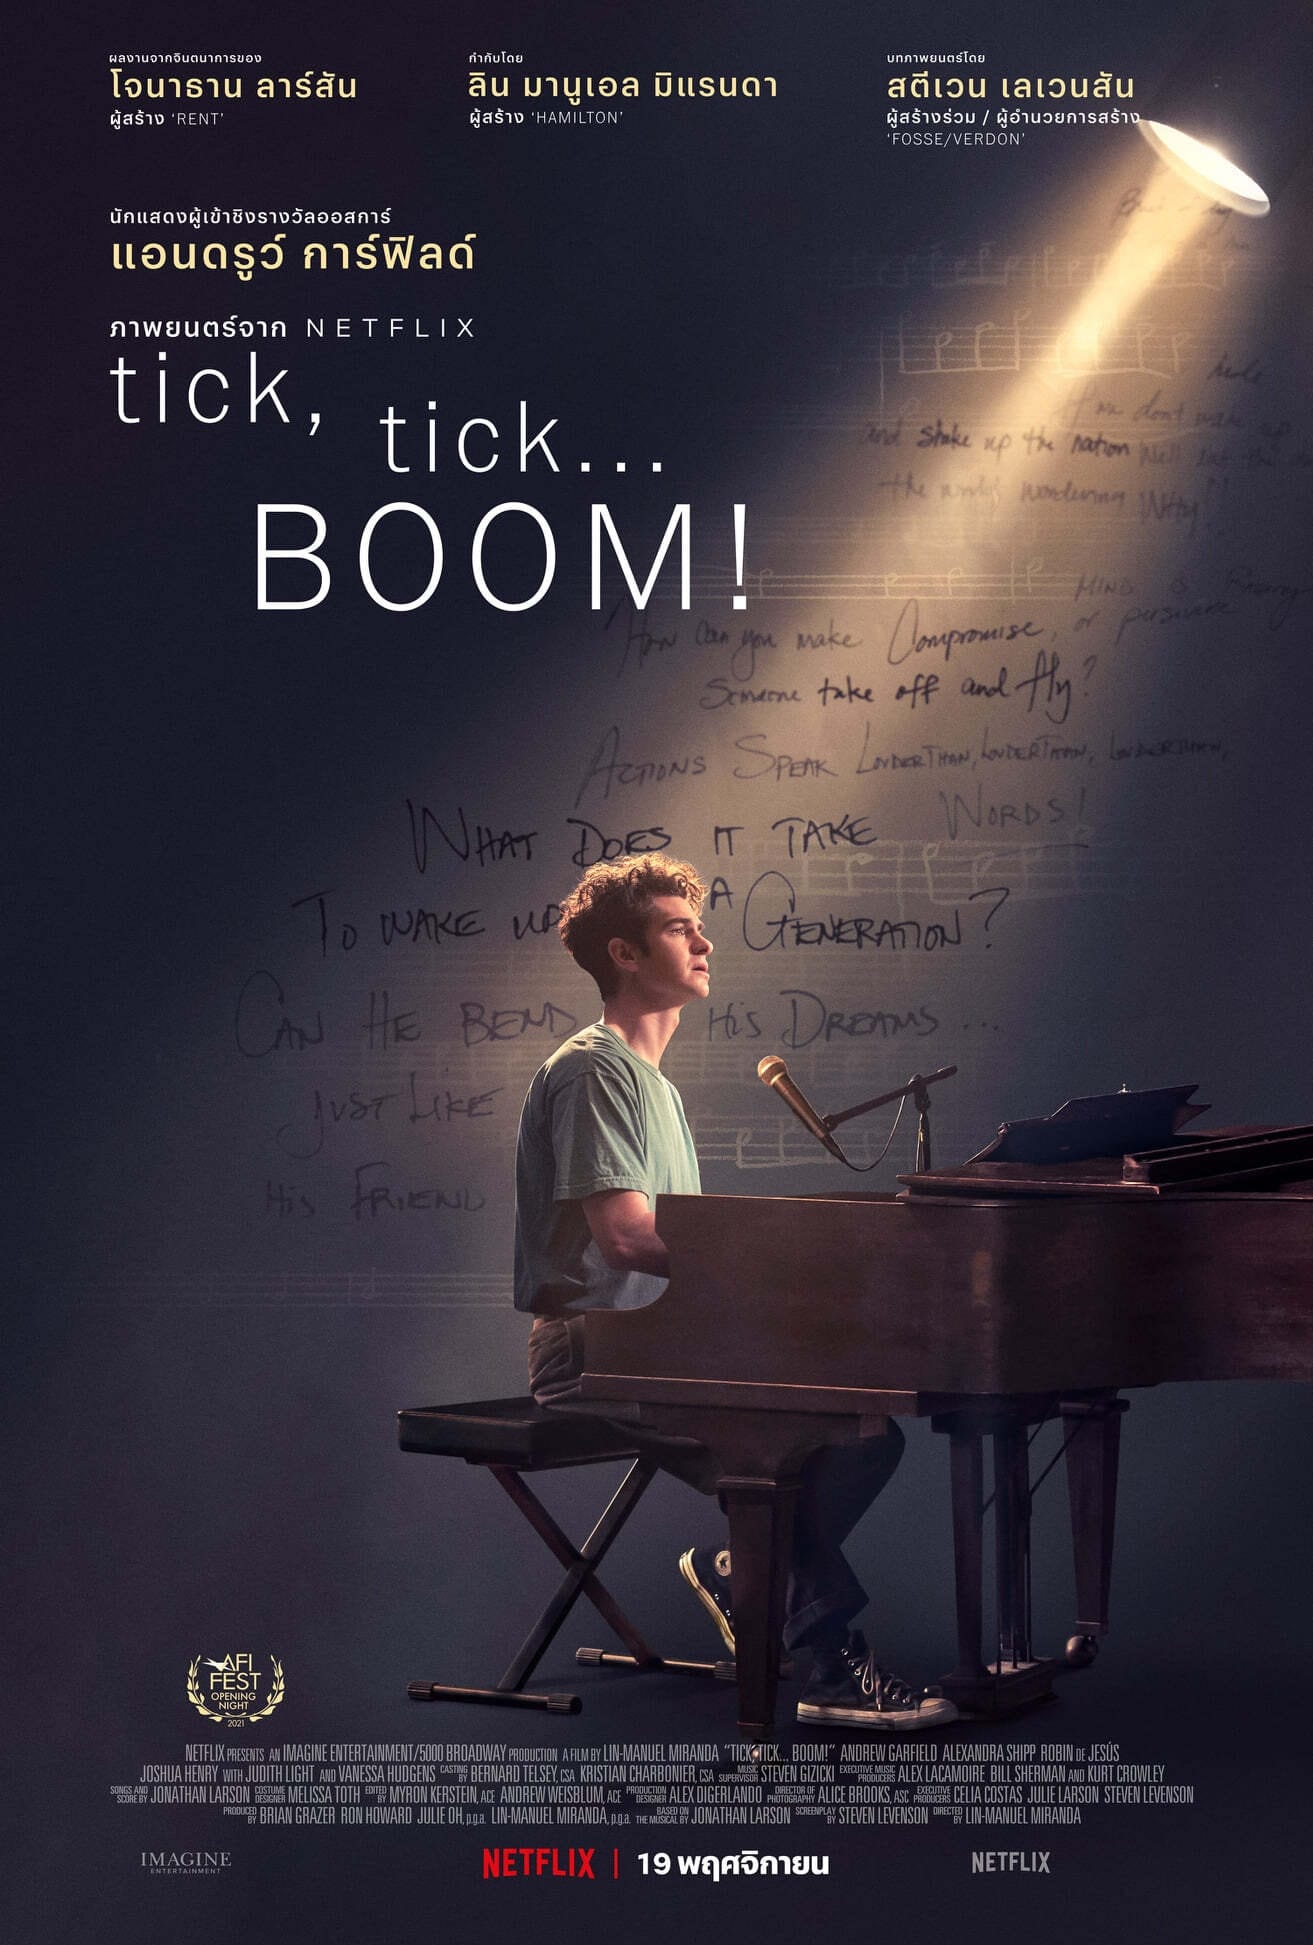 Locandina del Film "tick, tick… BOOM!"